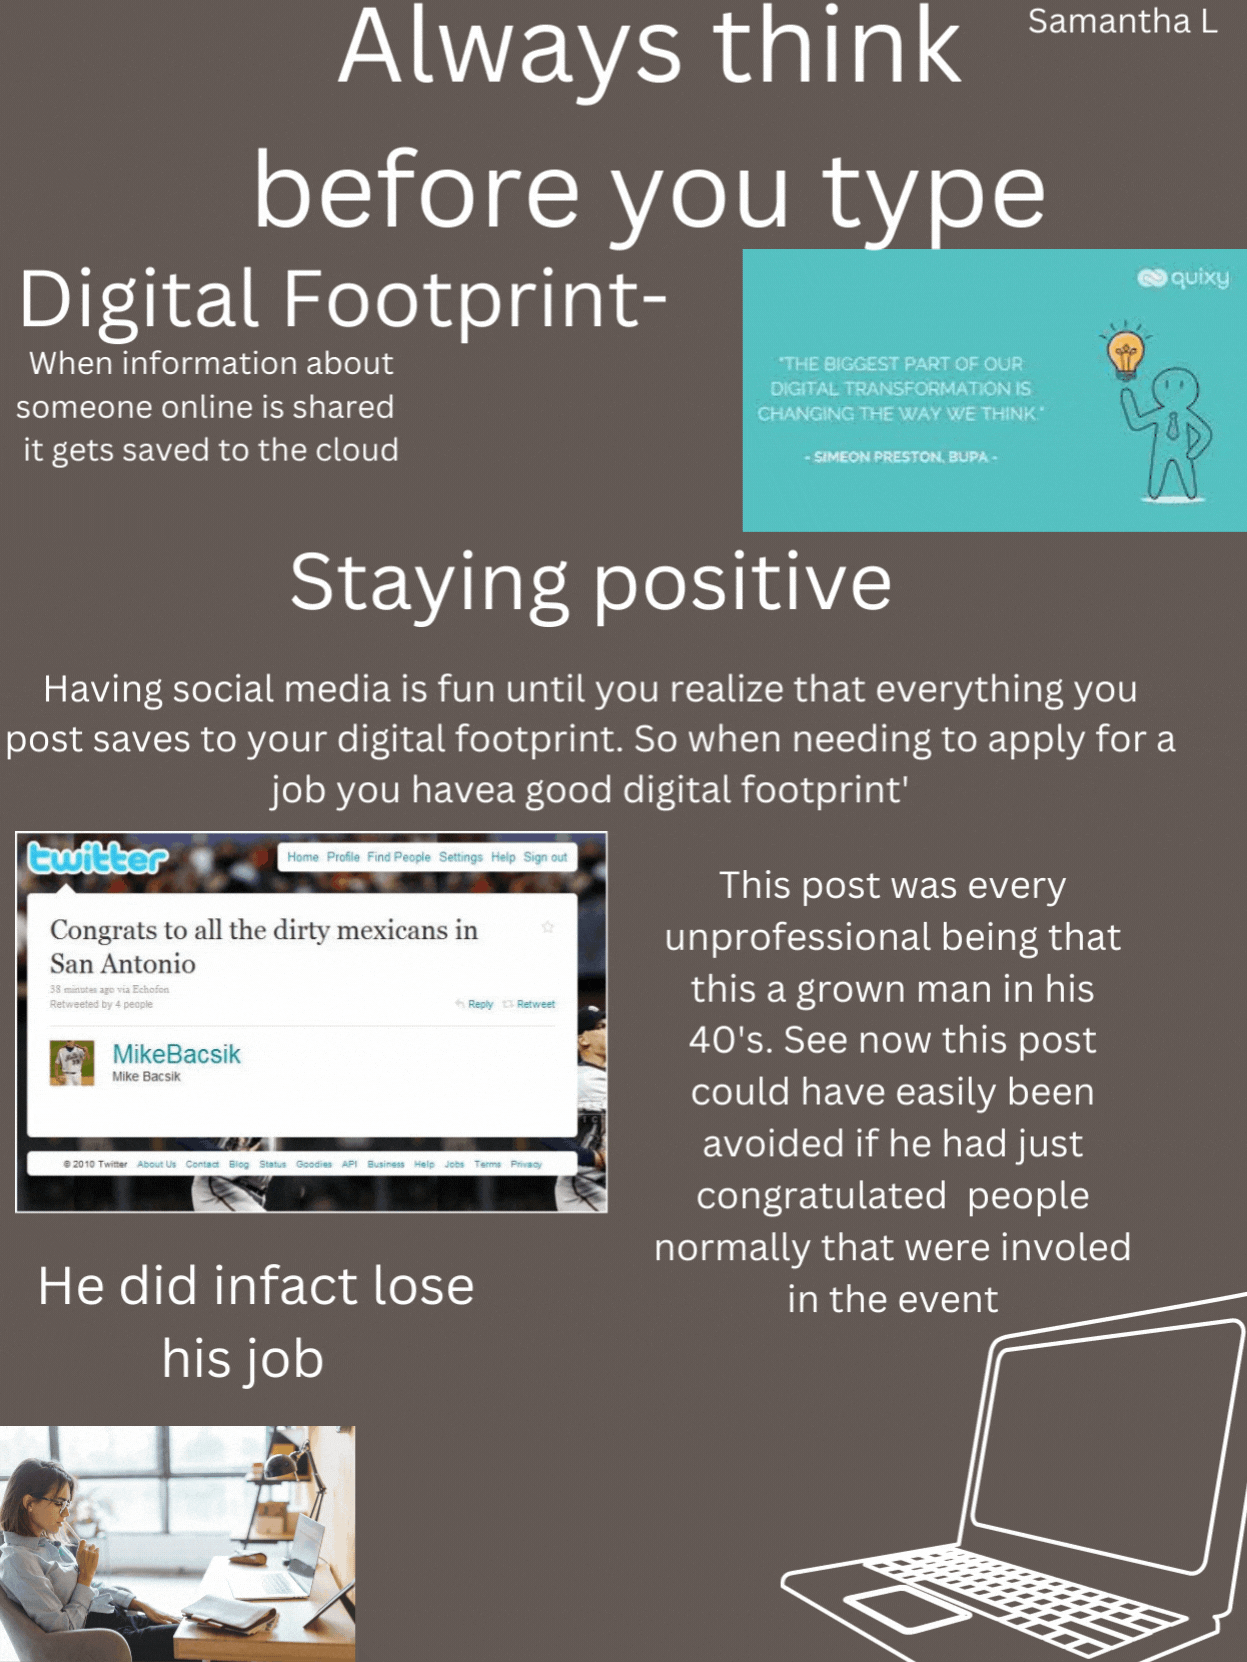 Digital Footprint Poster - Samantha L.